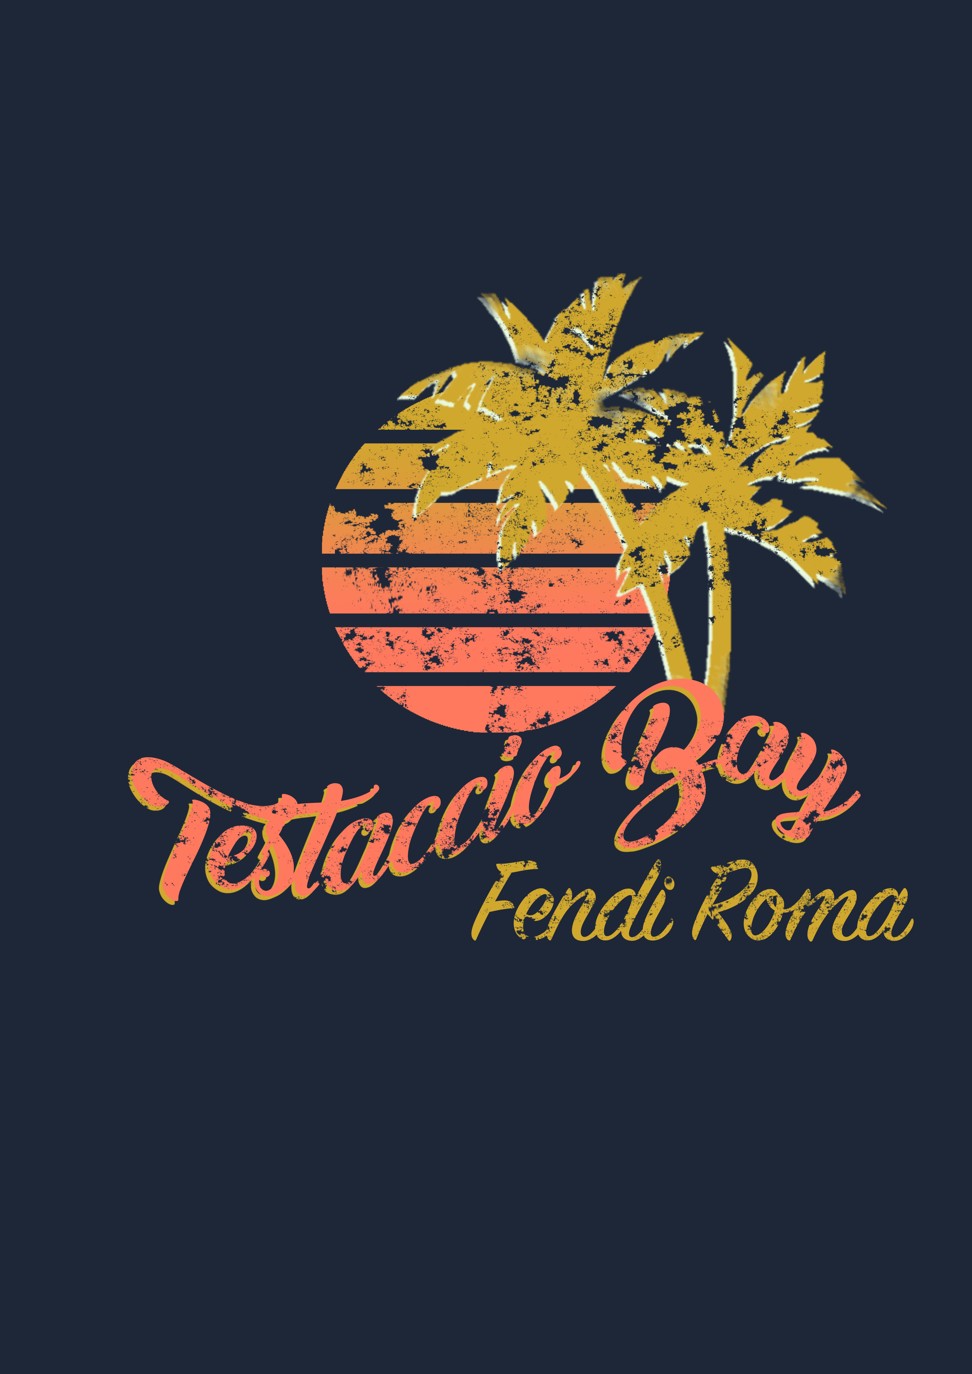 Fendi’s Pop Tour ‘Testaccio Bay’ print